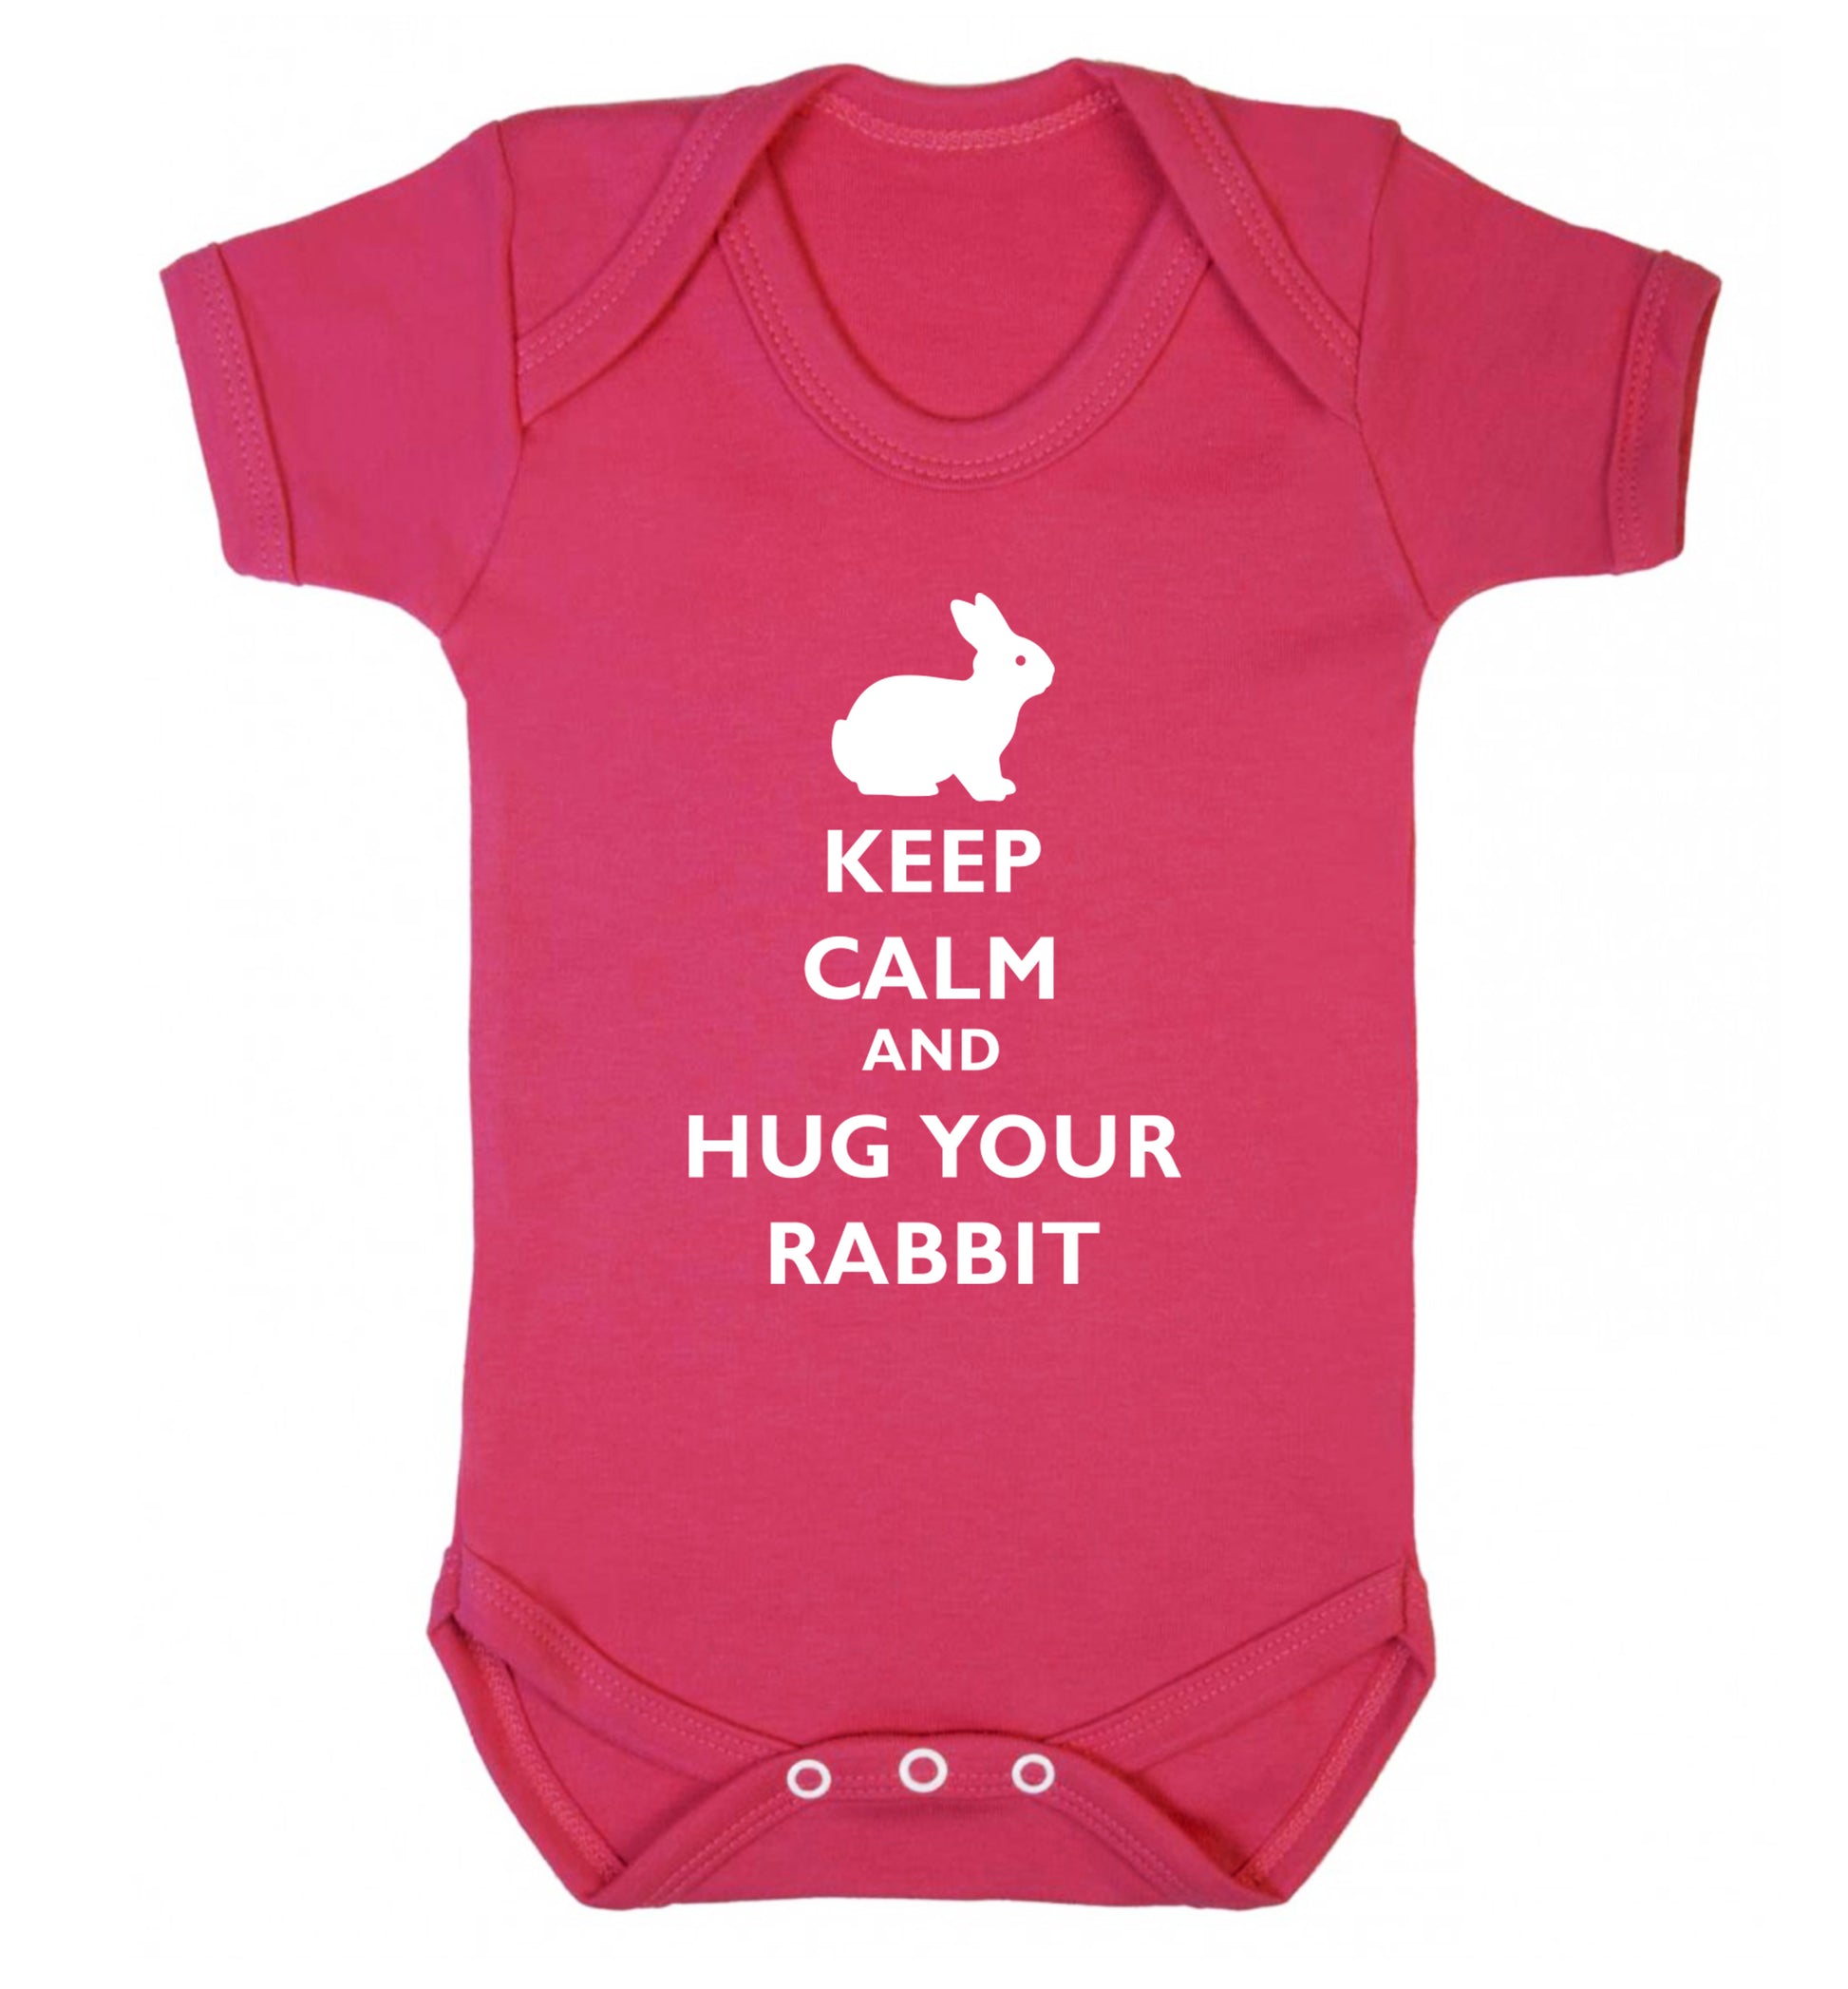 Keep calm and hug your rabbit Baby Vest dark pink 18-24 months